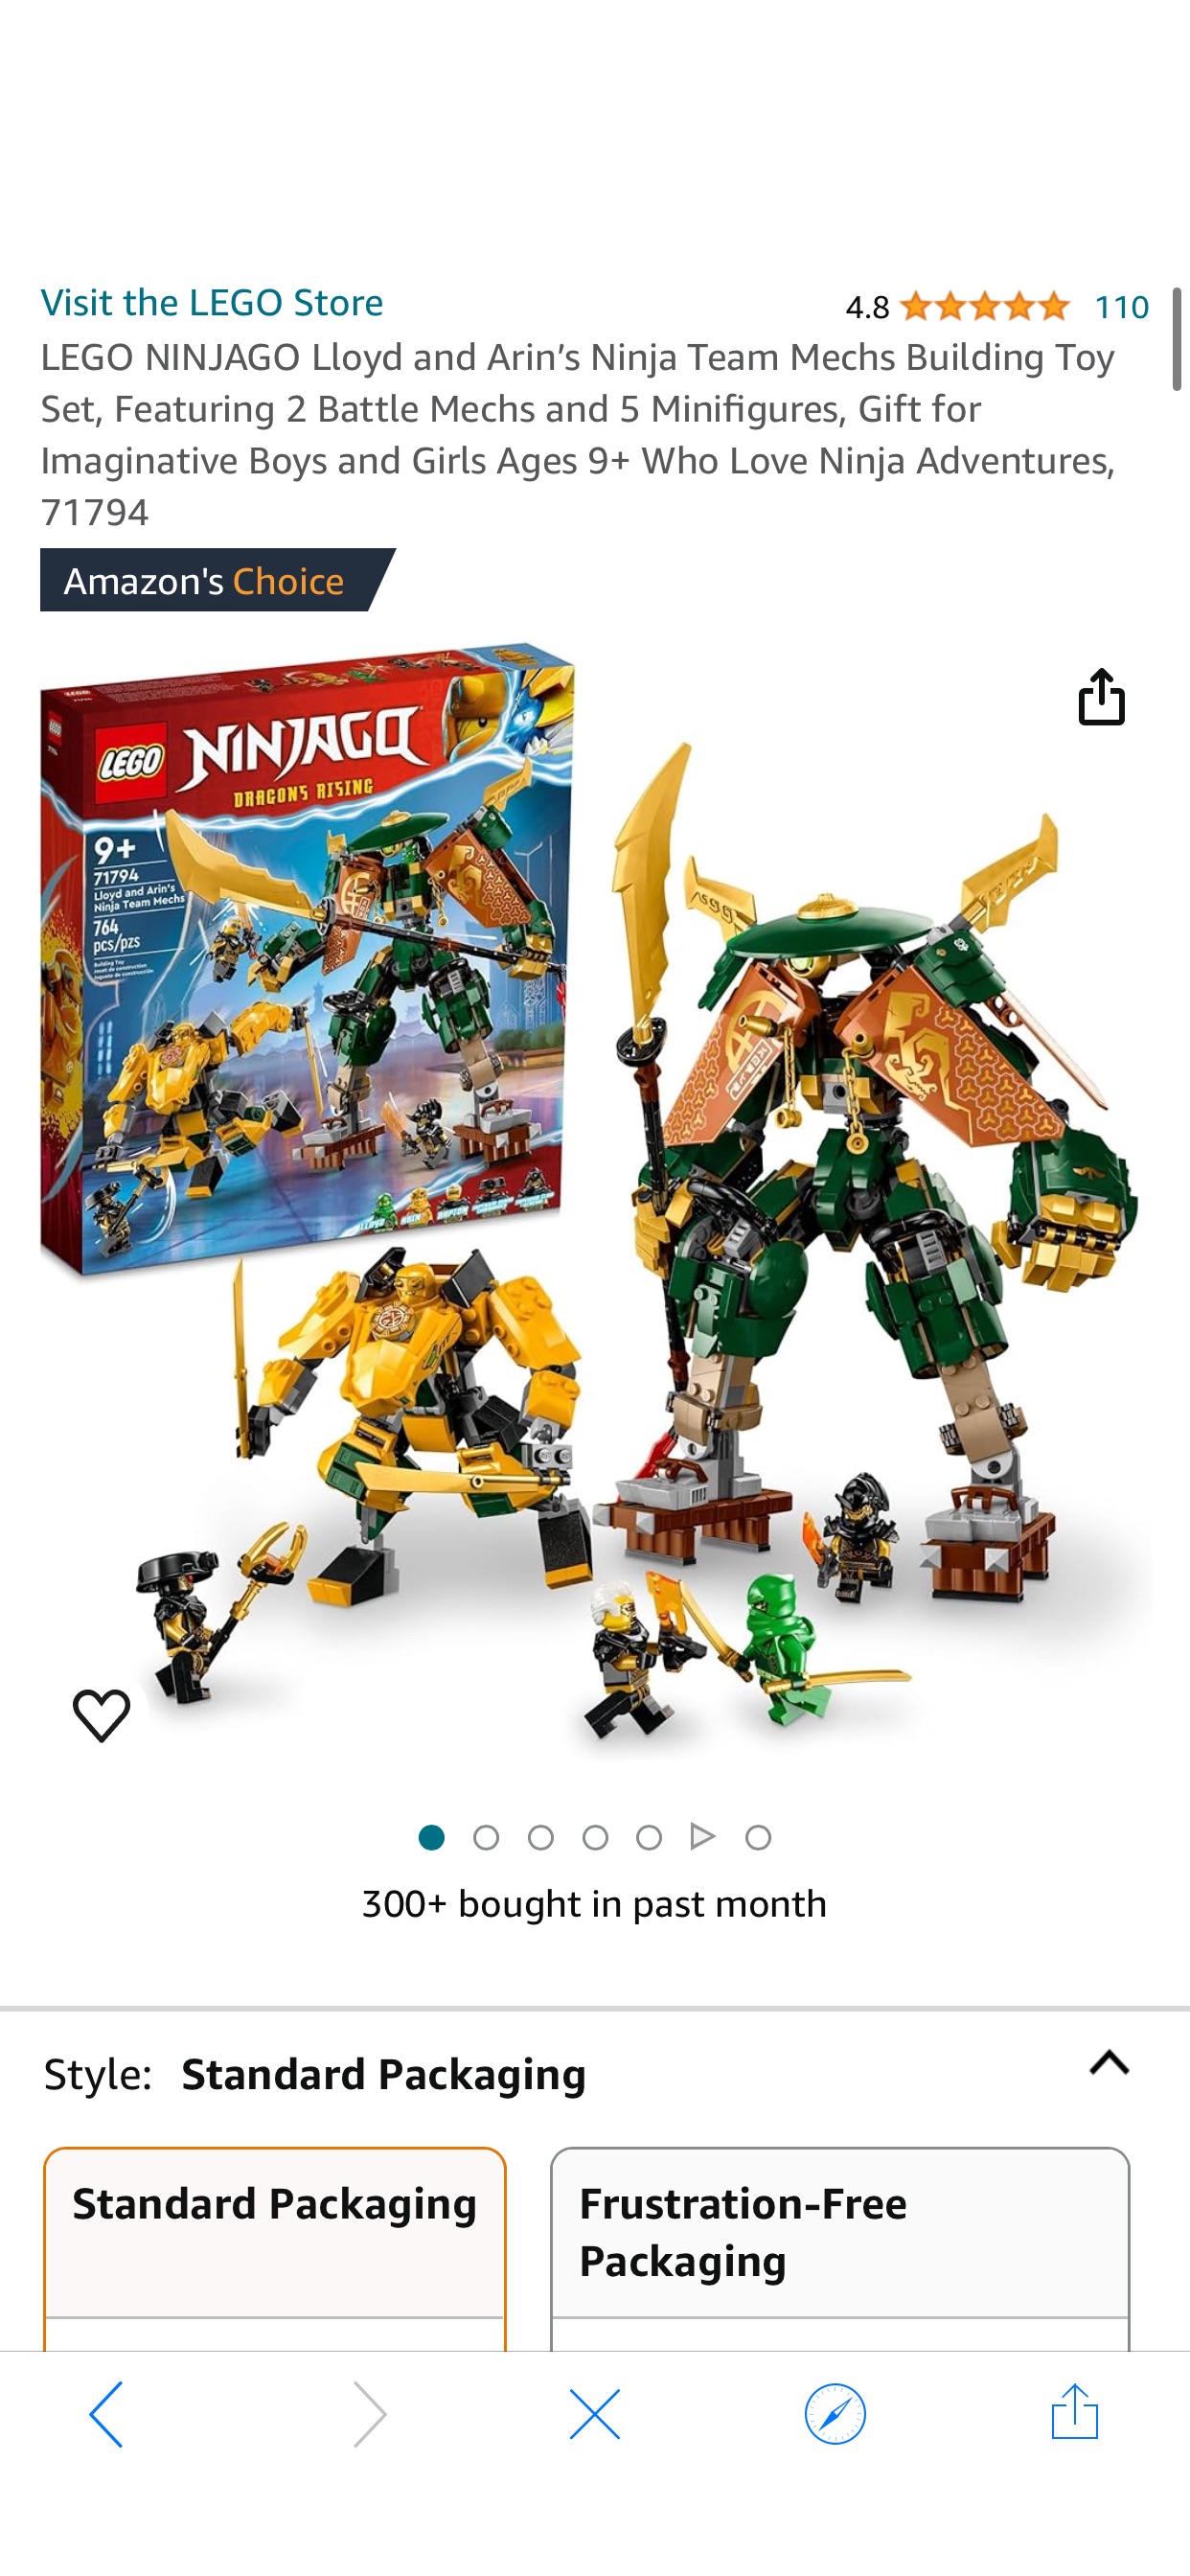 Amazon.com: LEGO NINJAGO Lloyd and Arin’s Ninja Team Mechs Building Toy Set, Featuring 2 Battle Mechs and 5 Minifigures, Gift for Imaginative Boys and Girls Ages 9+ Who Love Ninja Adventures, 71794 乐高